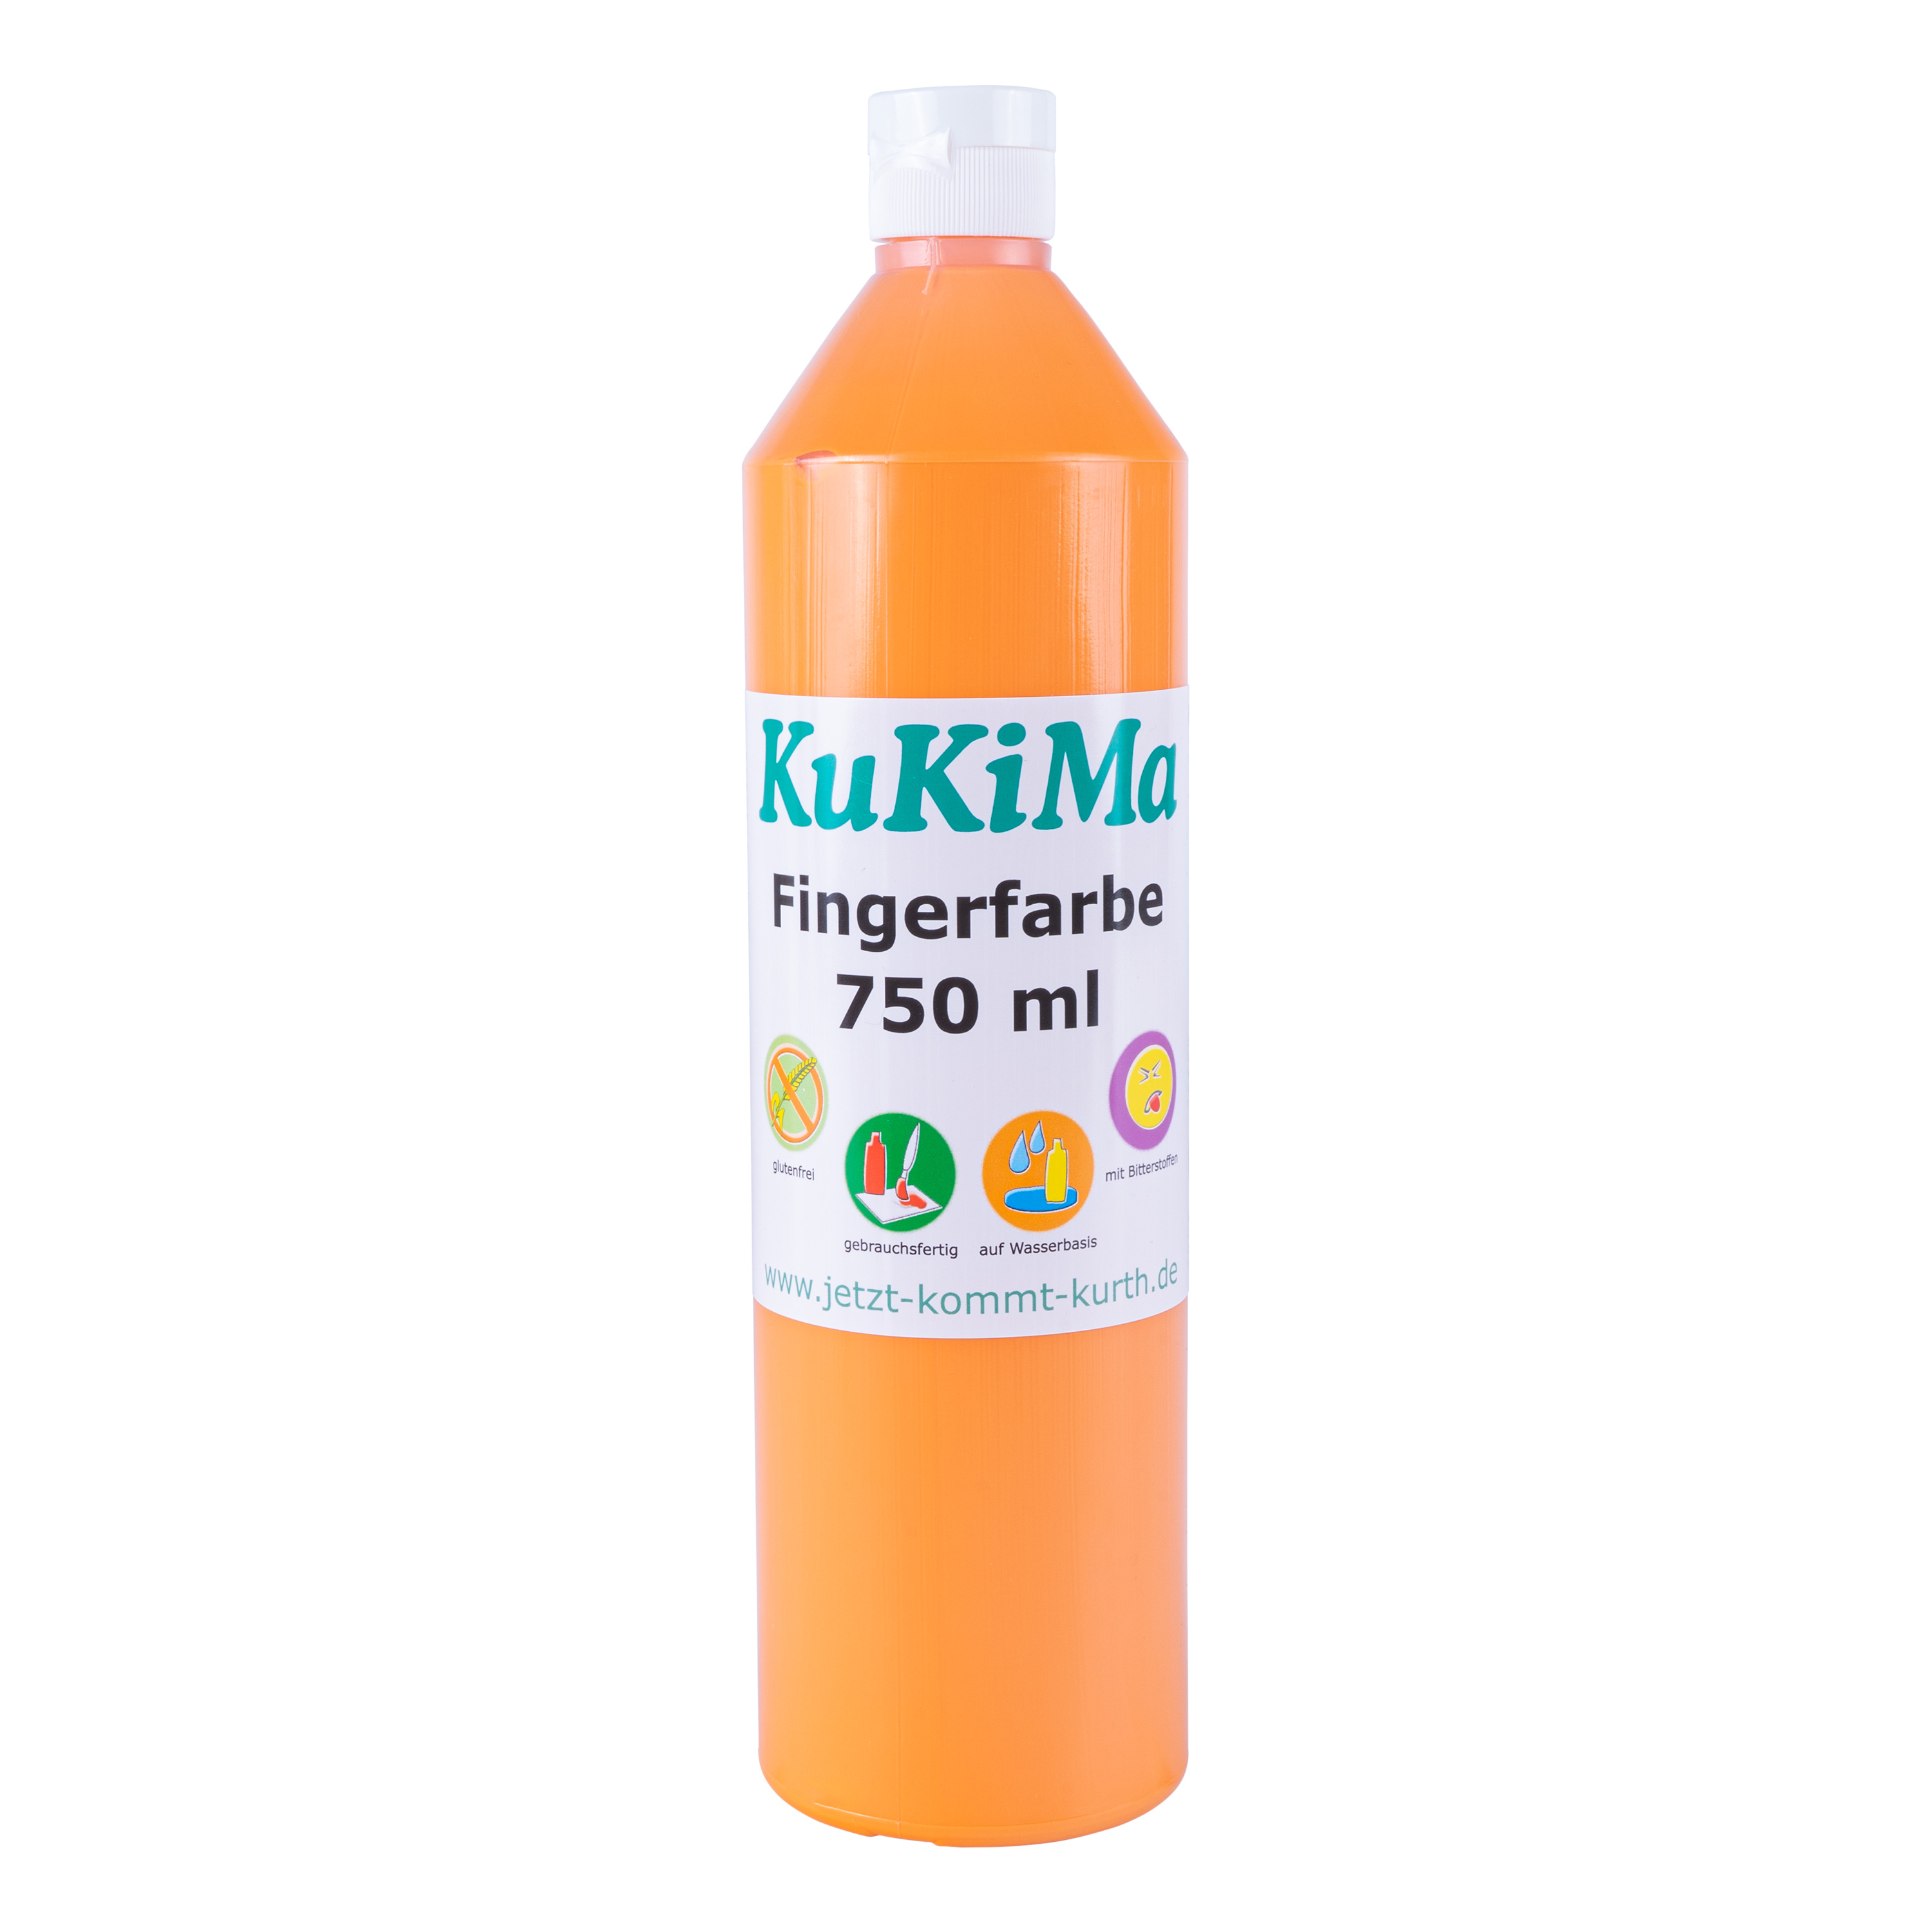 KuKiMa Fingerfarbe 750 ml, orange